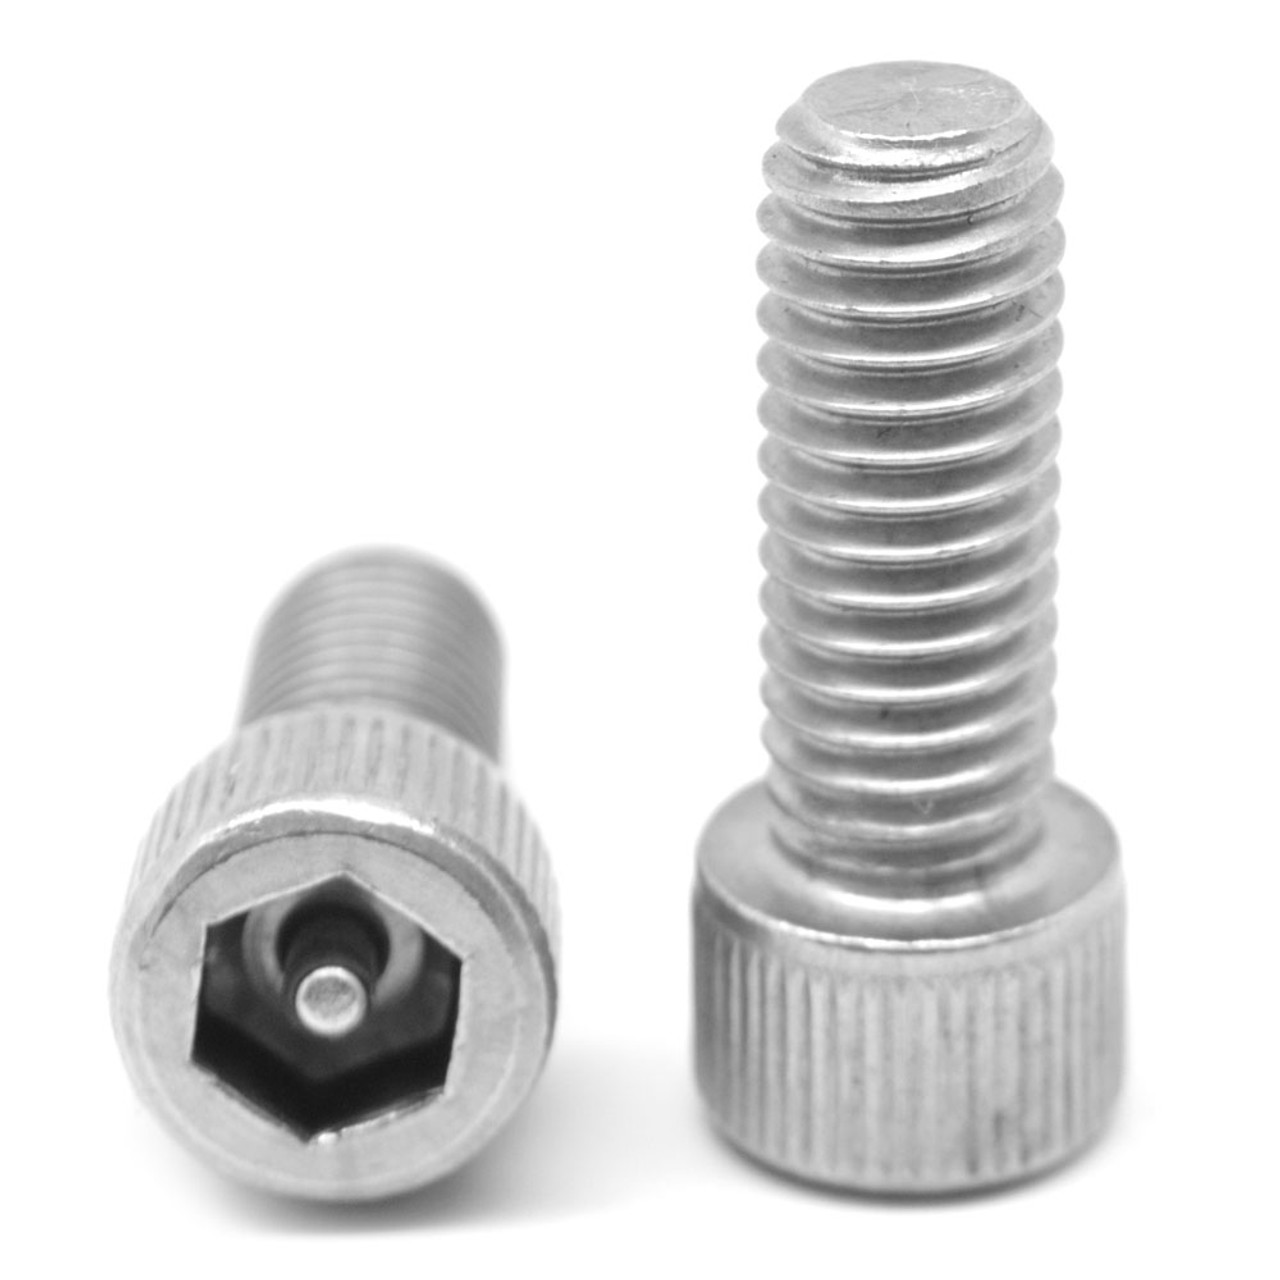 #10-24 x 1" (FT) Coarse Thread Socket Head Cap Screw Tamper Resistant Hex Pin-In Stainless Steel 18-8